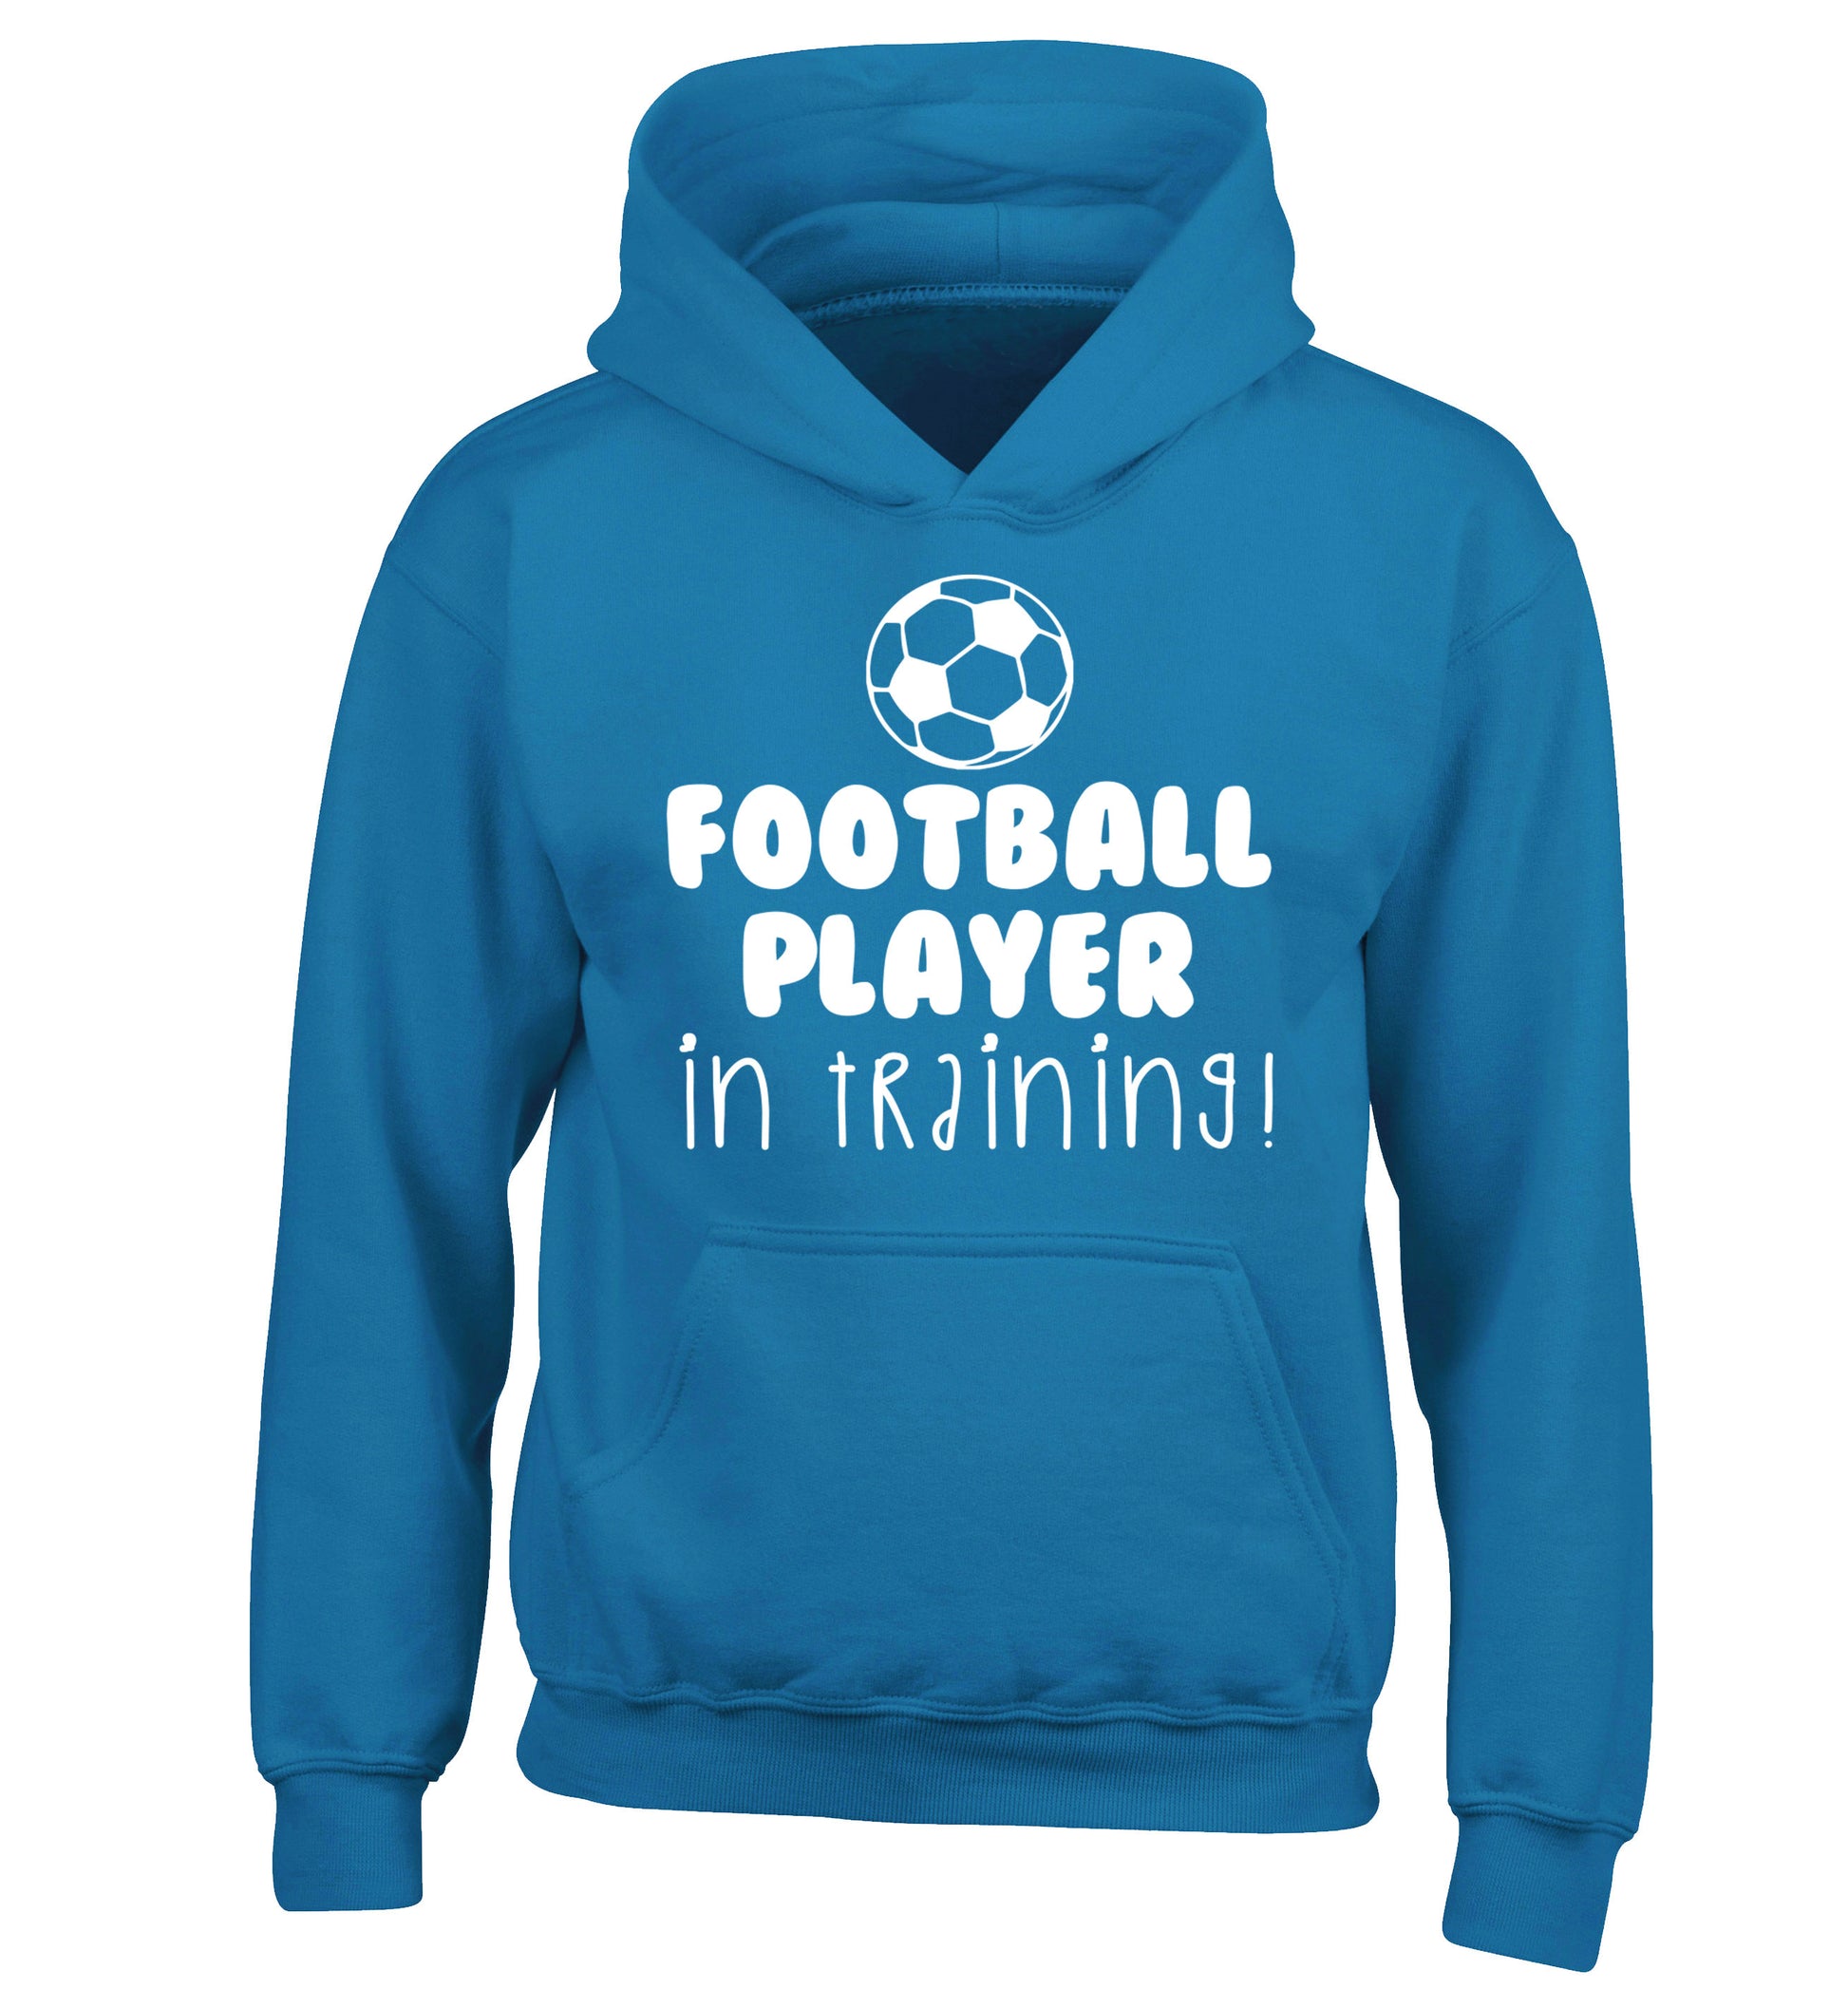 Football player in training children's blue hoodie 12-14 Years